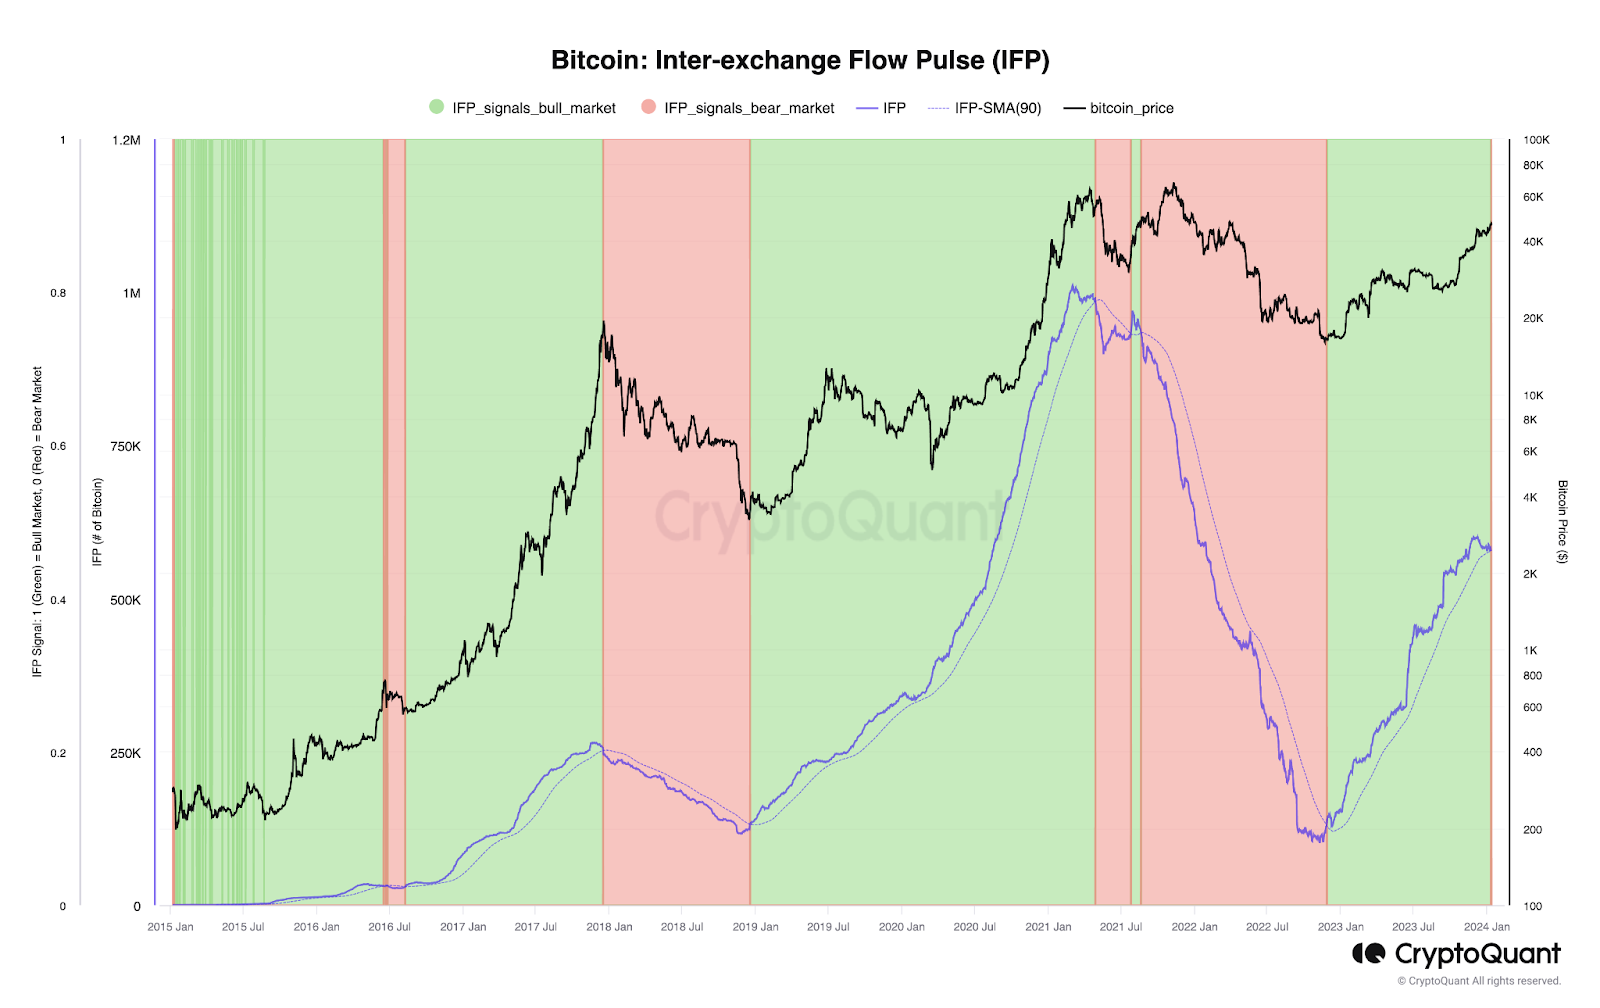 Inter-Exchange Flow Pulse (IFP) de Bitcoin. Fuente: CryptoQuant